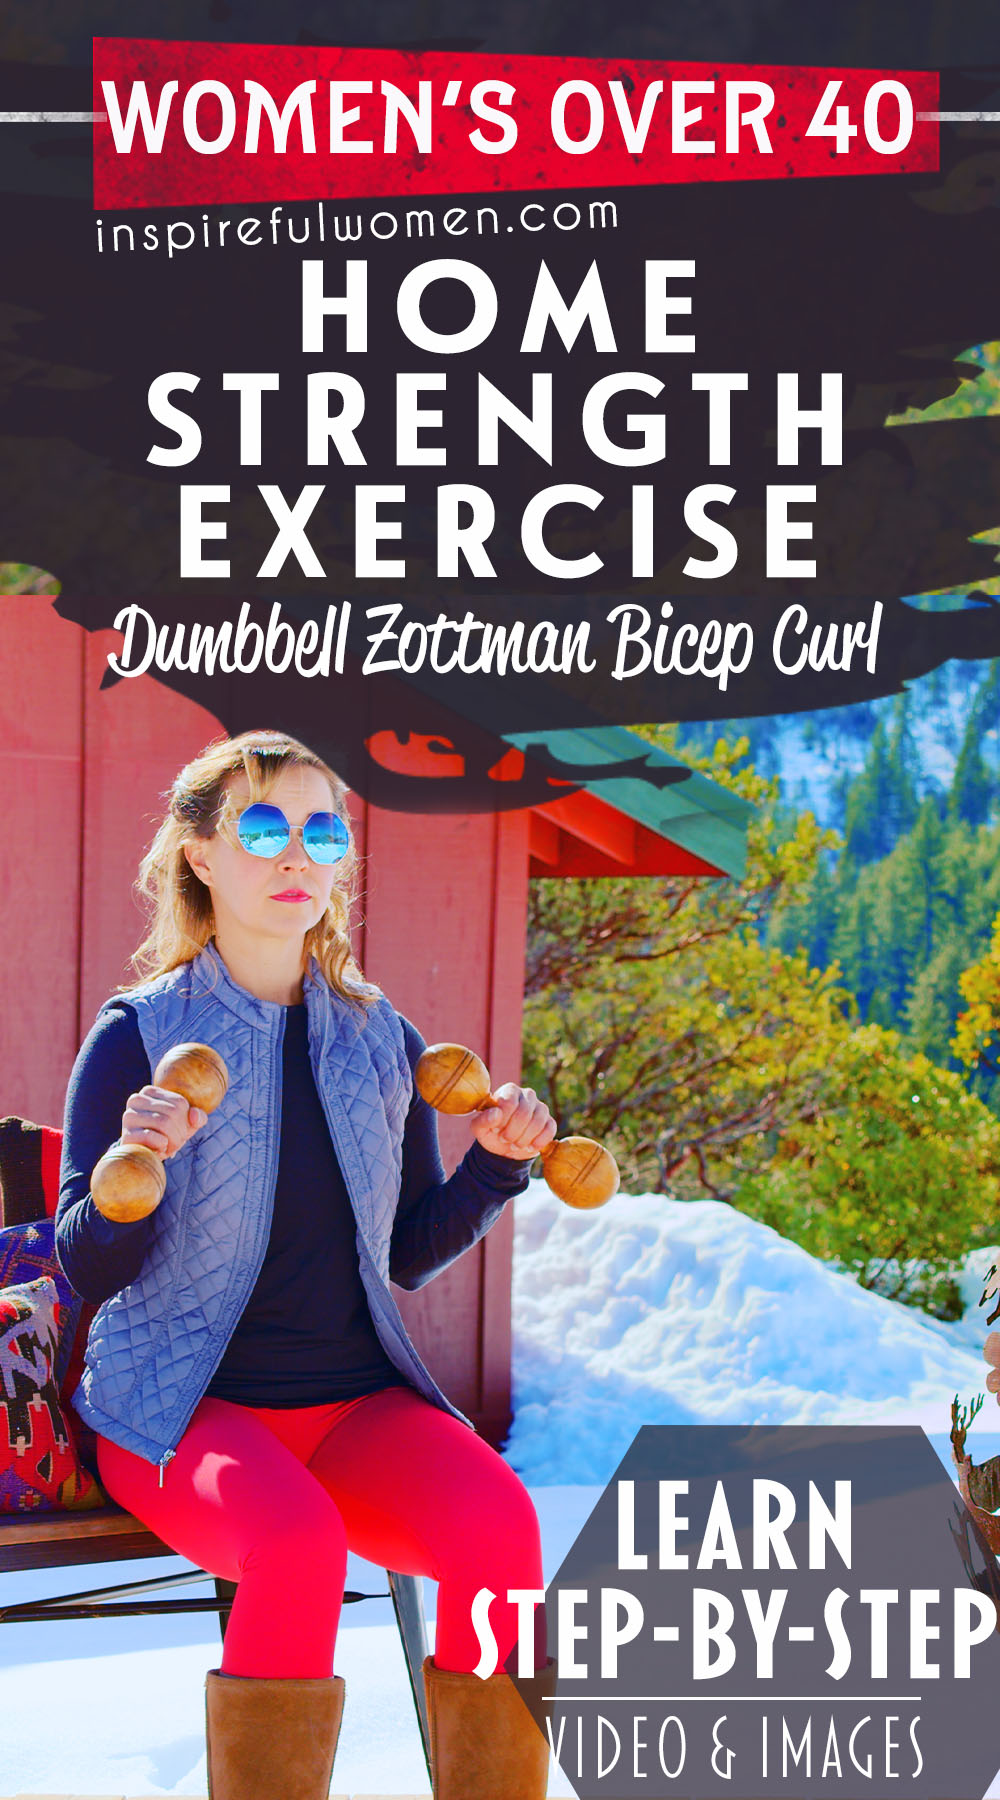 zottman-curl-dumbbell-biceps-exercise-online-tutorial-videos-women-over-40